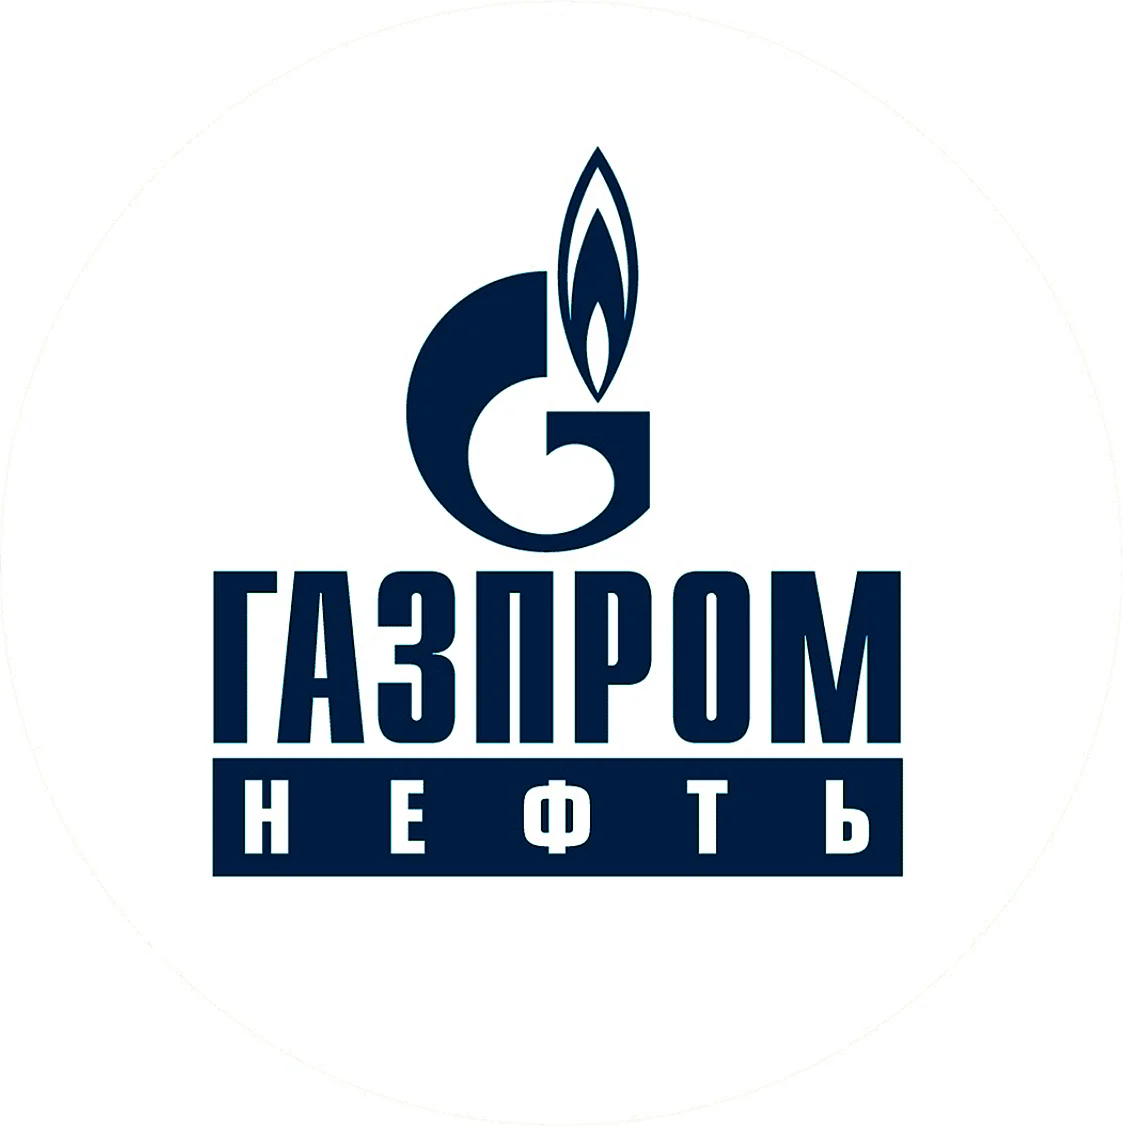 ООО Газпром трансгаз Краснодар логотип